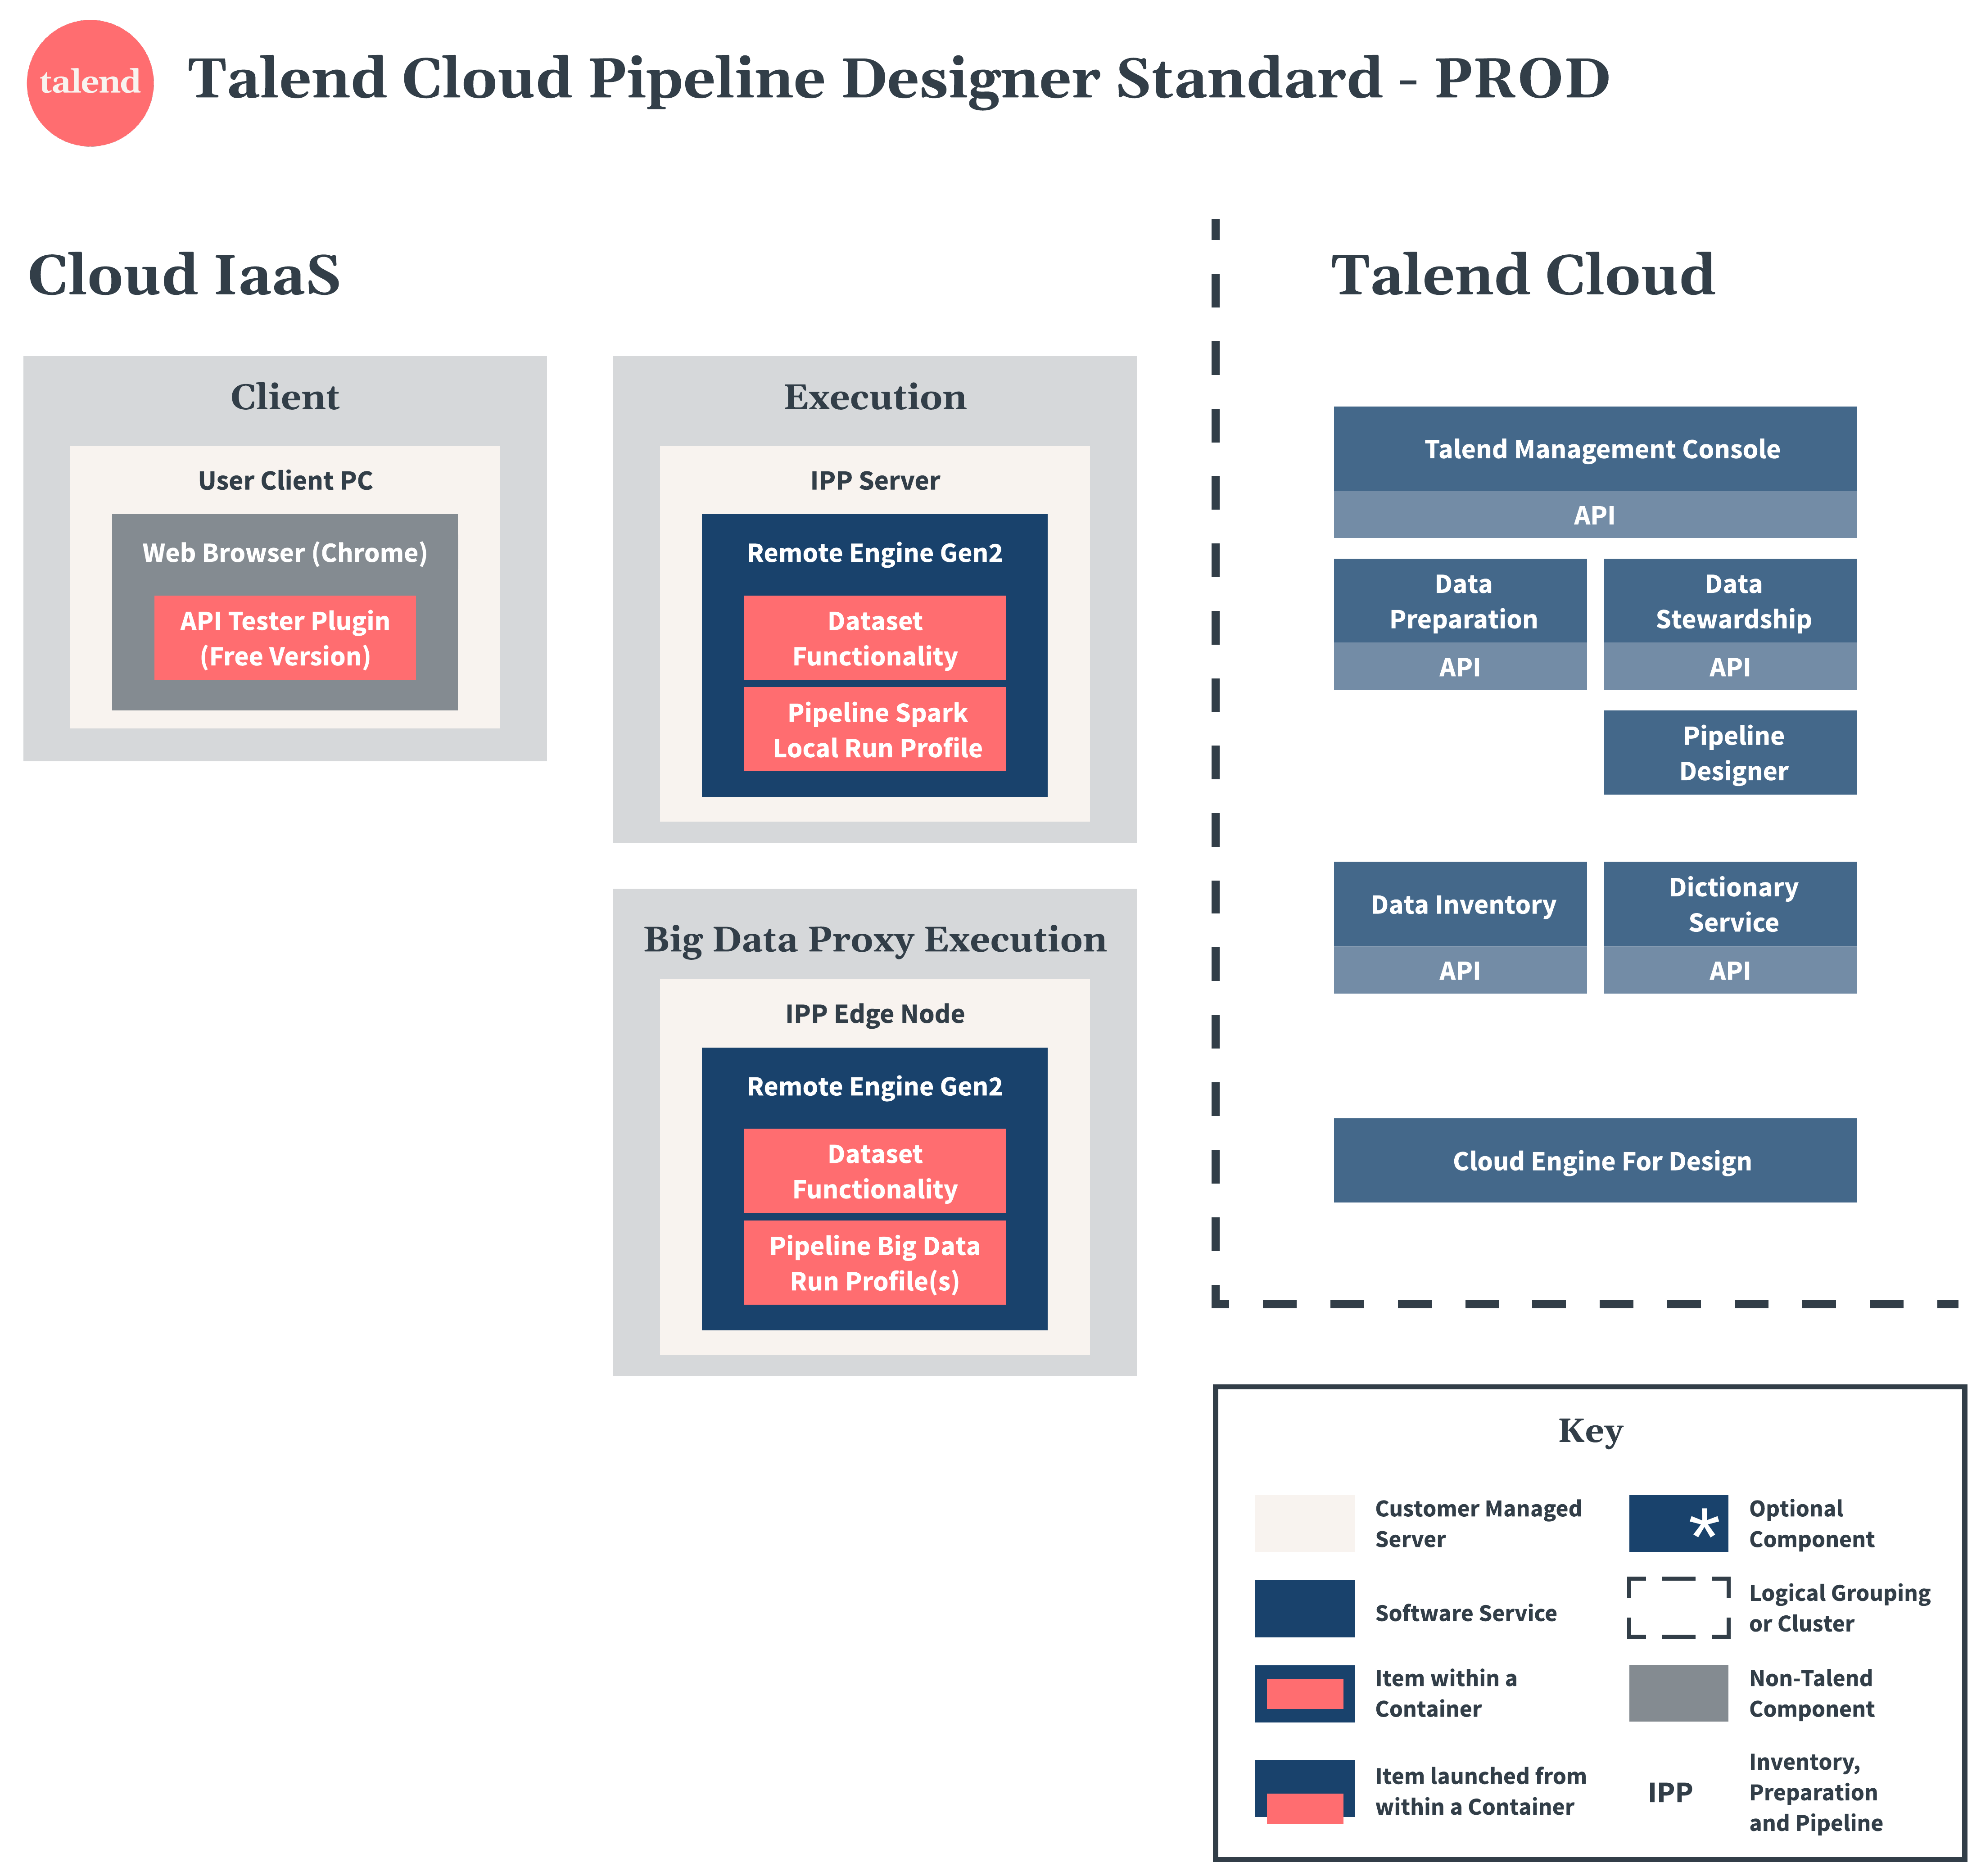 Talend Cloud Pipeline Designer Diagramm zu Standardproduktion.